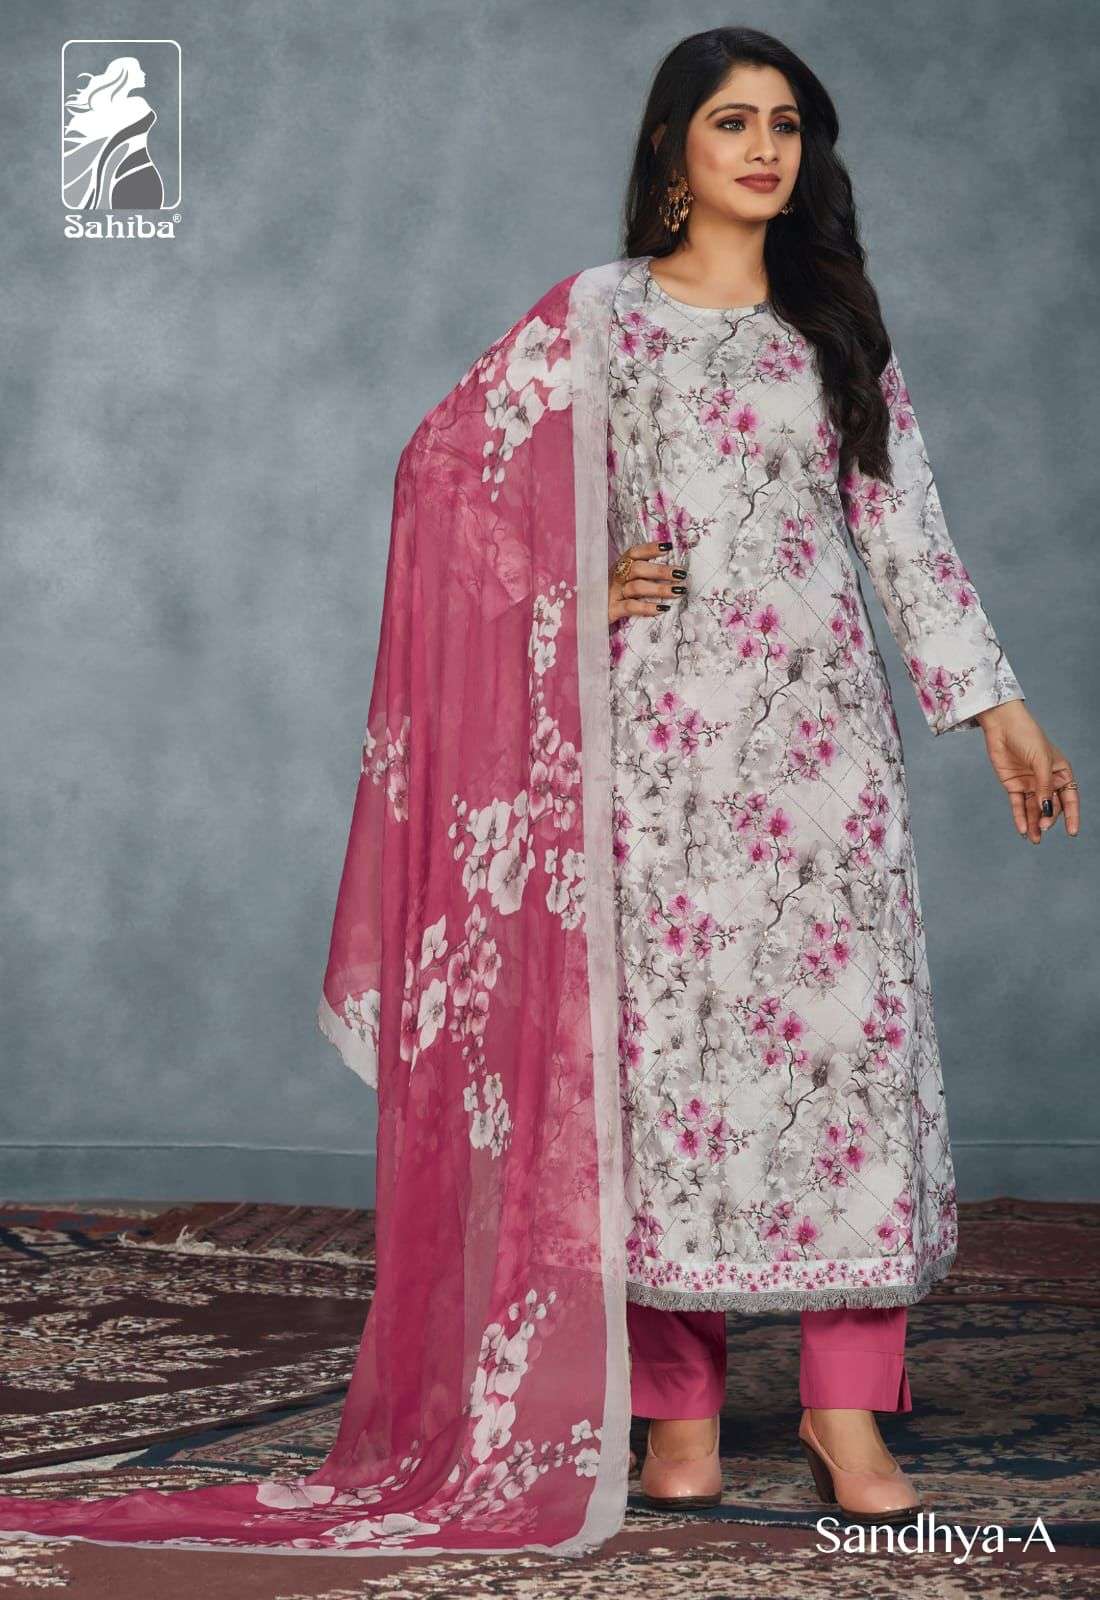 Sahiba Sandhya Cambric Cotton With digital print suit collec...